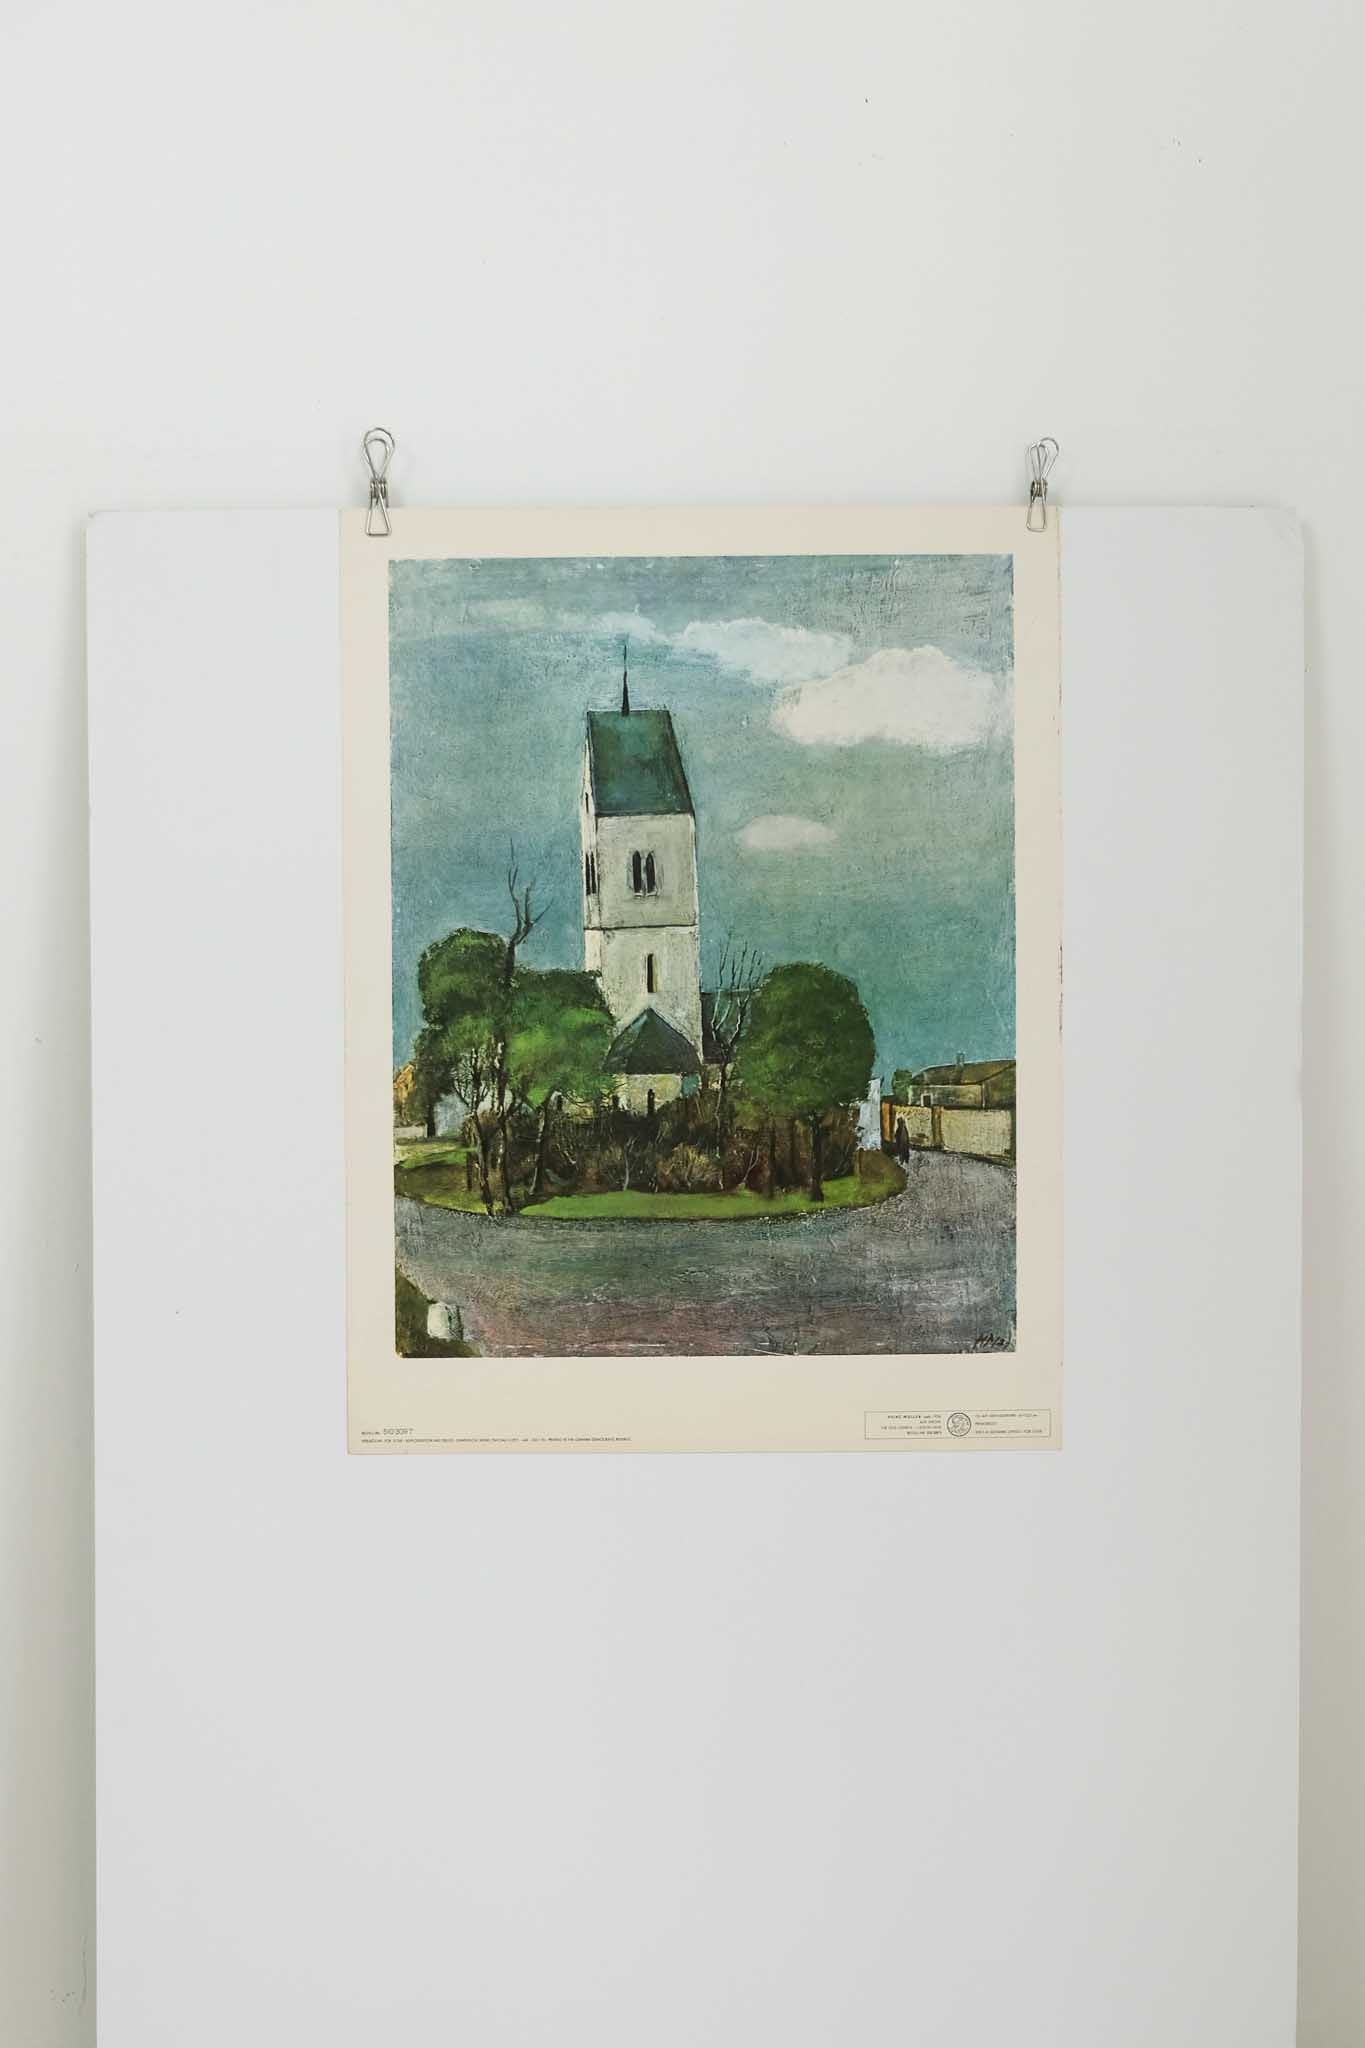 Heinz Muller "The Old Church" Print